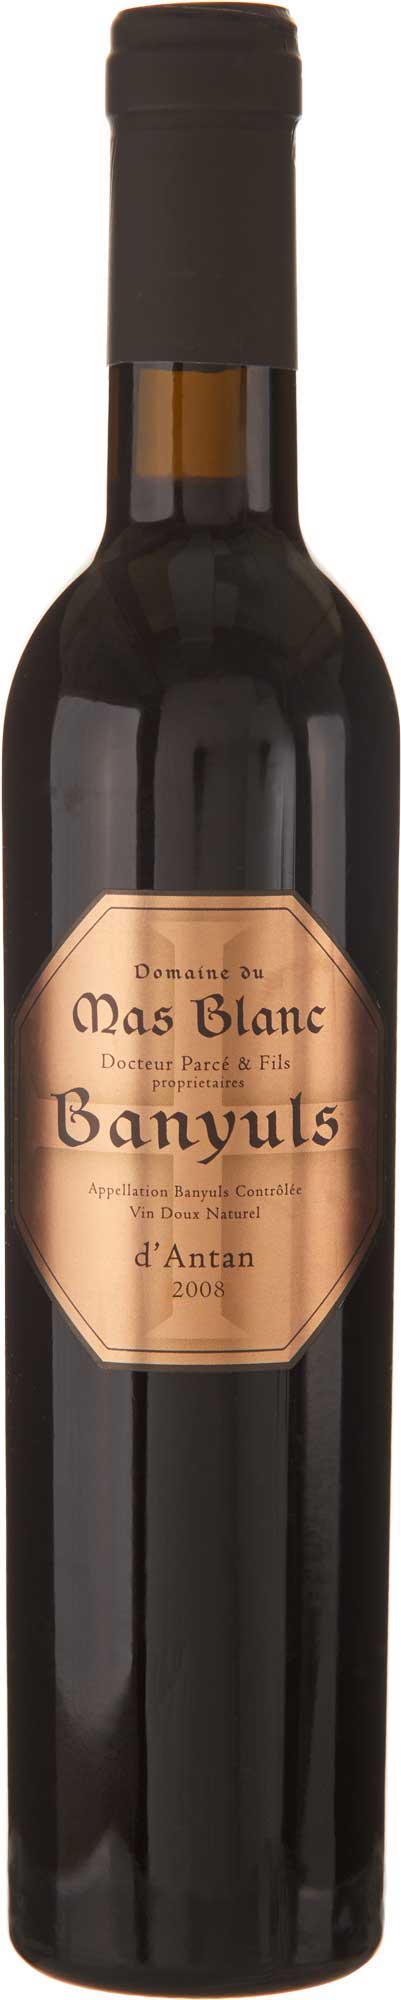 Domaine du Mas Blanc - Banyuls d'Antan 2008 (375)